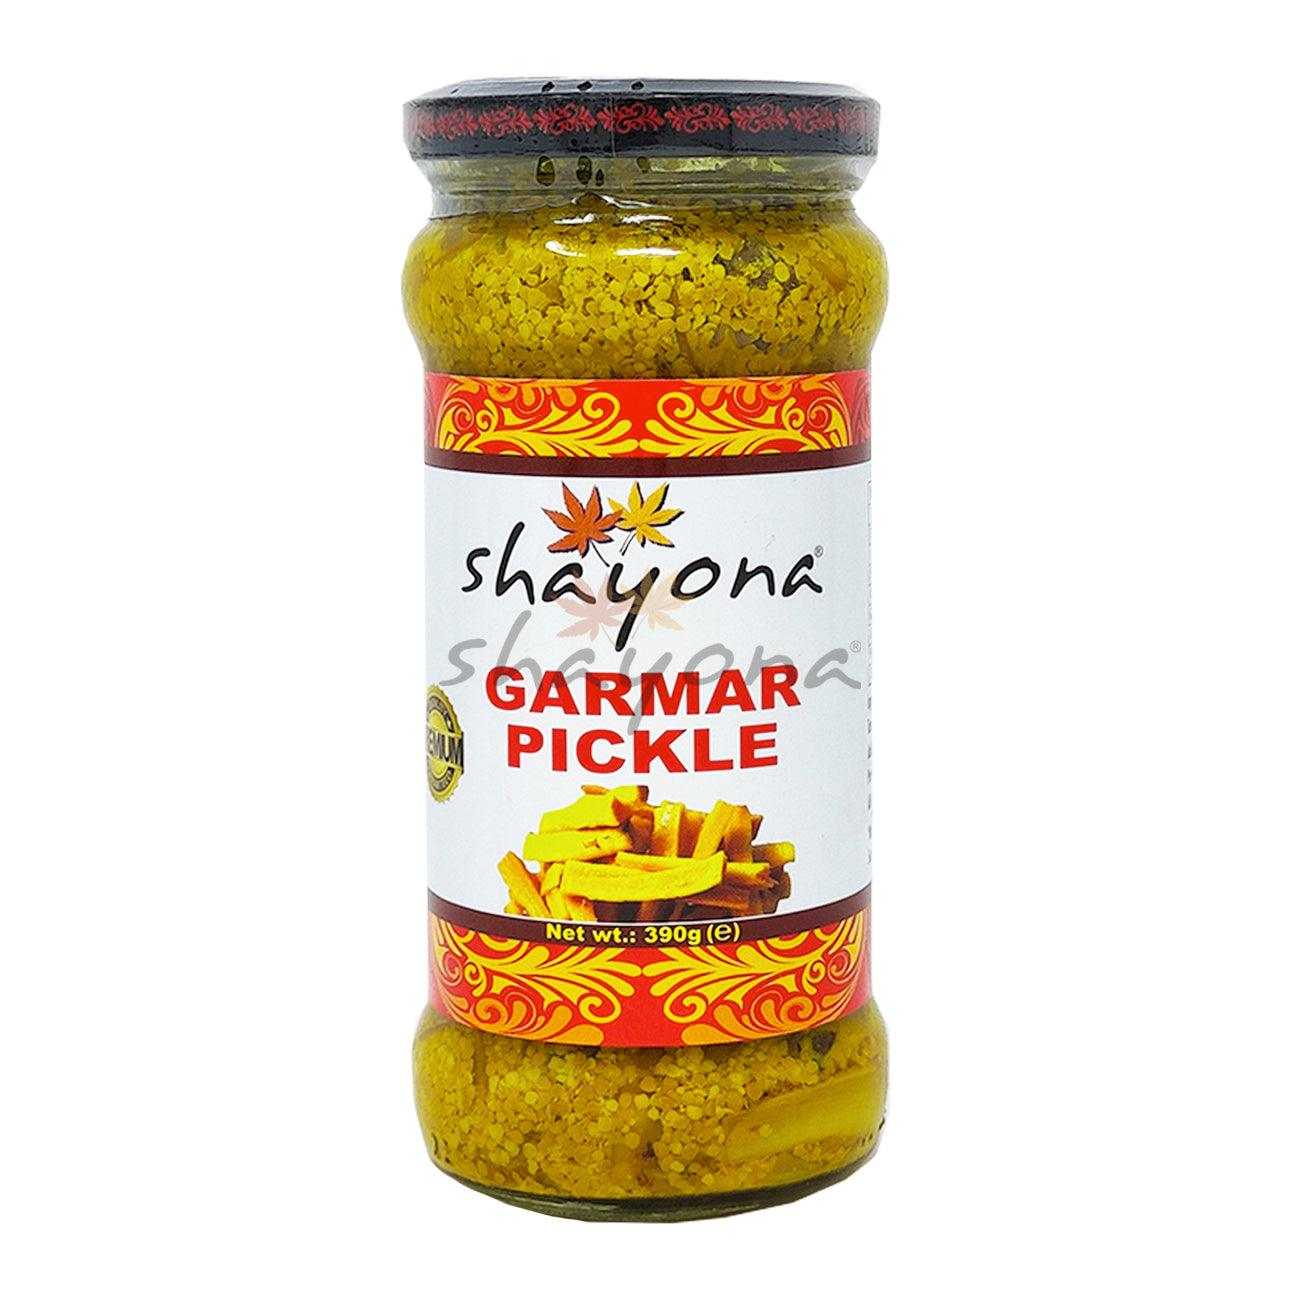 Shayona Garmar Pickle